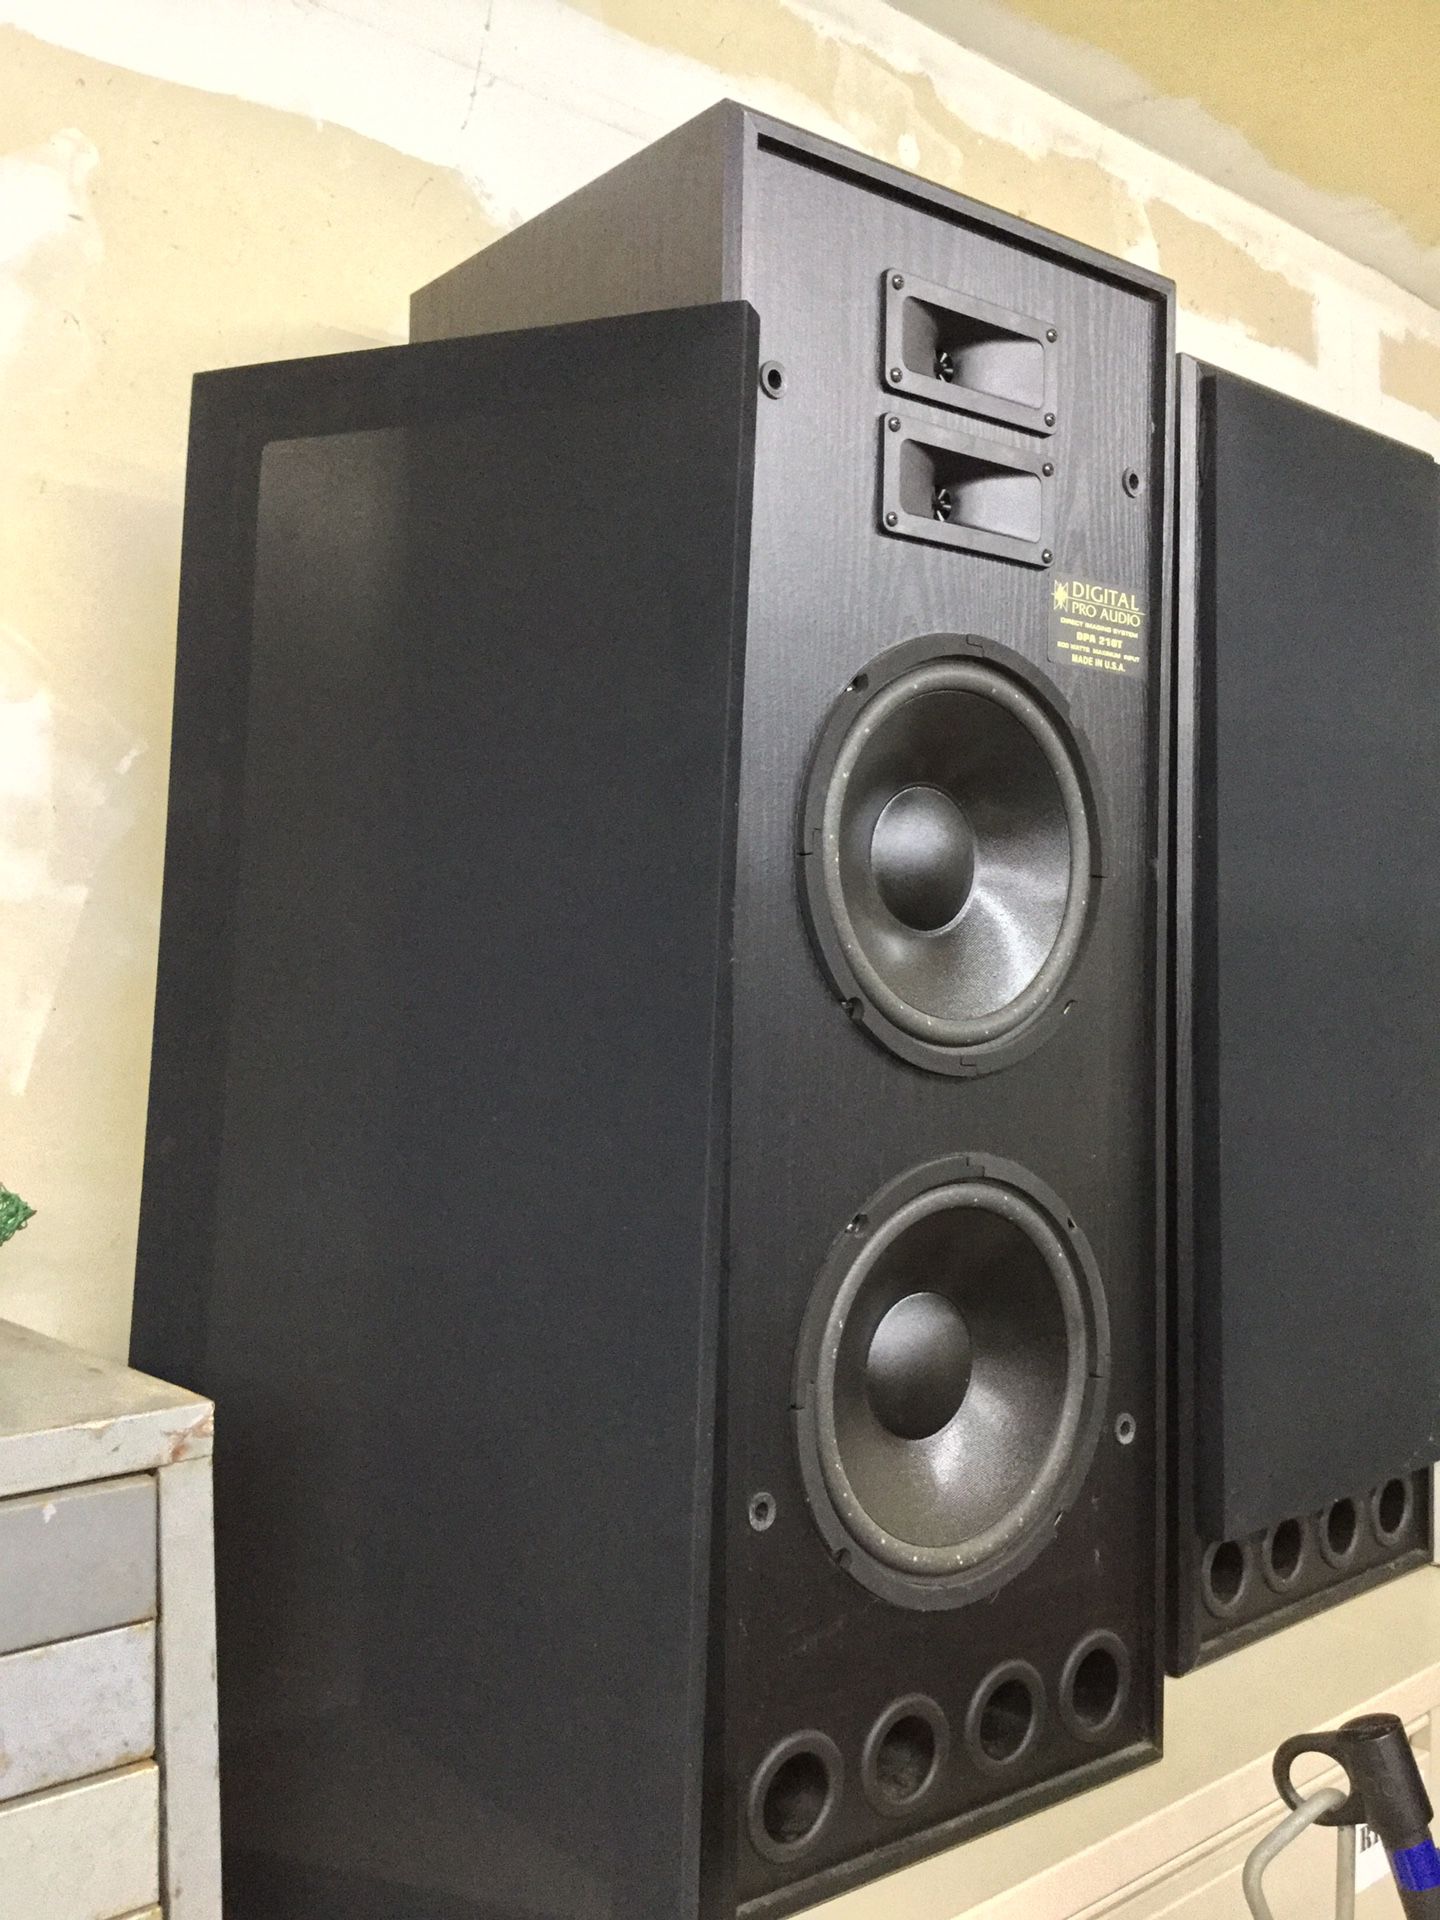 Digital Pro Audio. 200Watt RMS Huge Tower Speakers. Need a new home, hardly used.